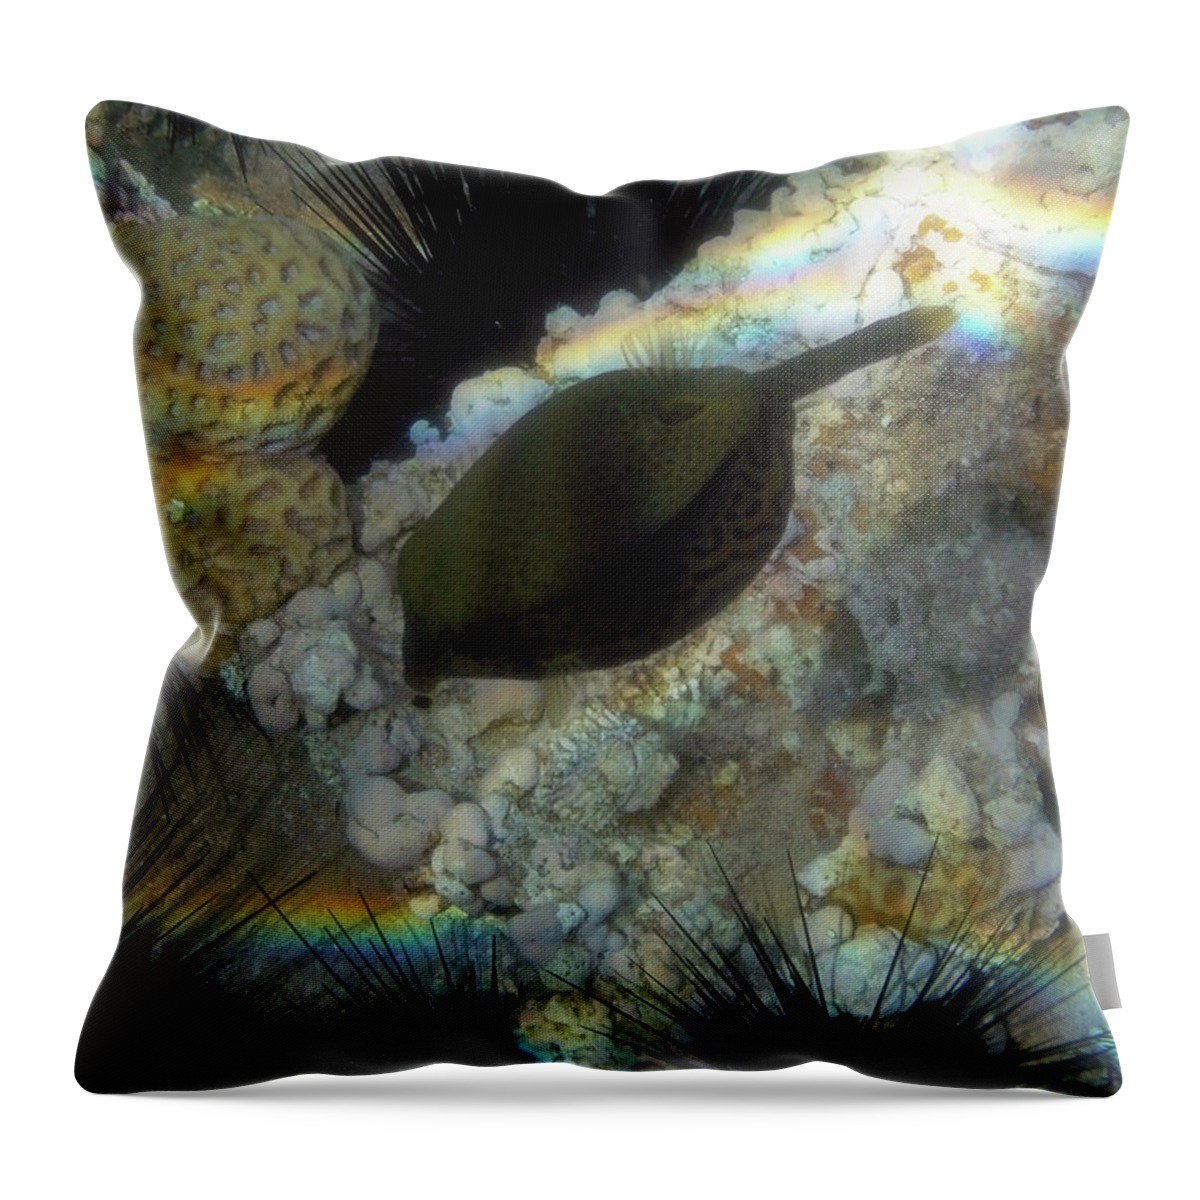 Underwater Throw Pillow featuring the photograph Arabian Boxfish by Johanna Hurmerinta